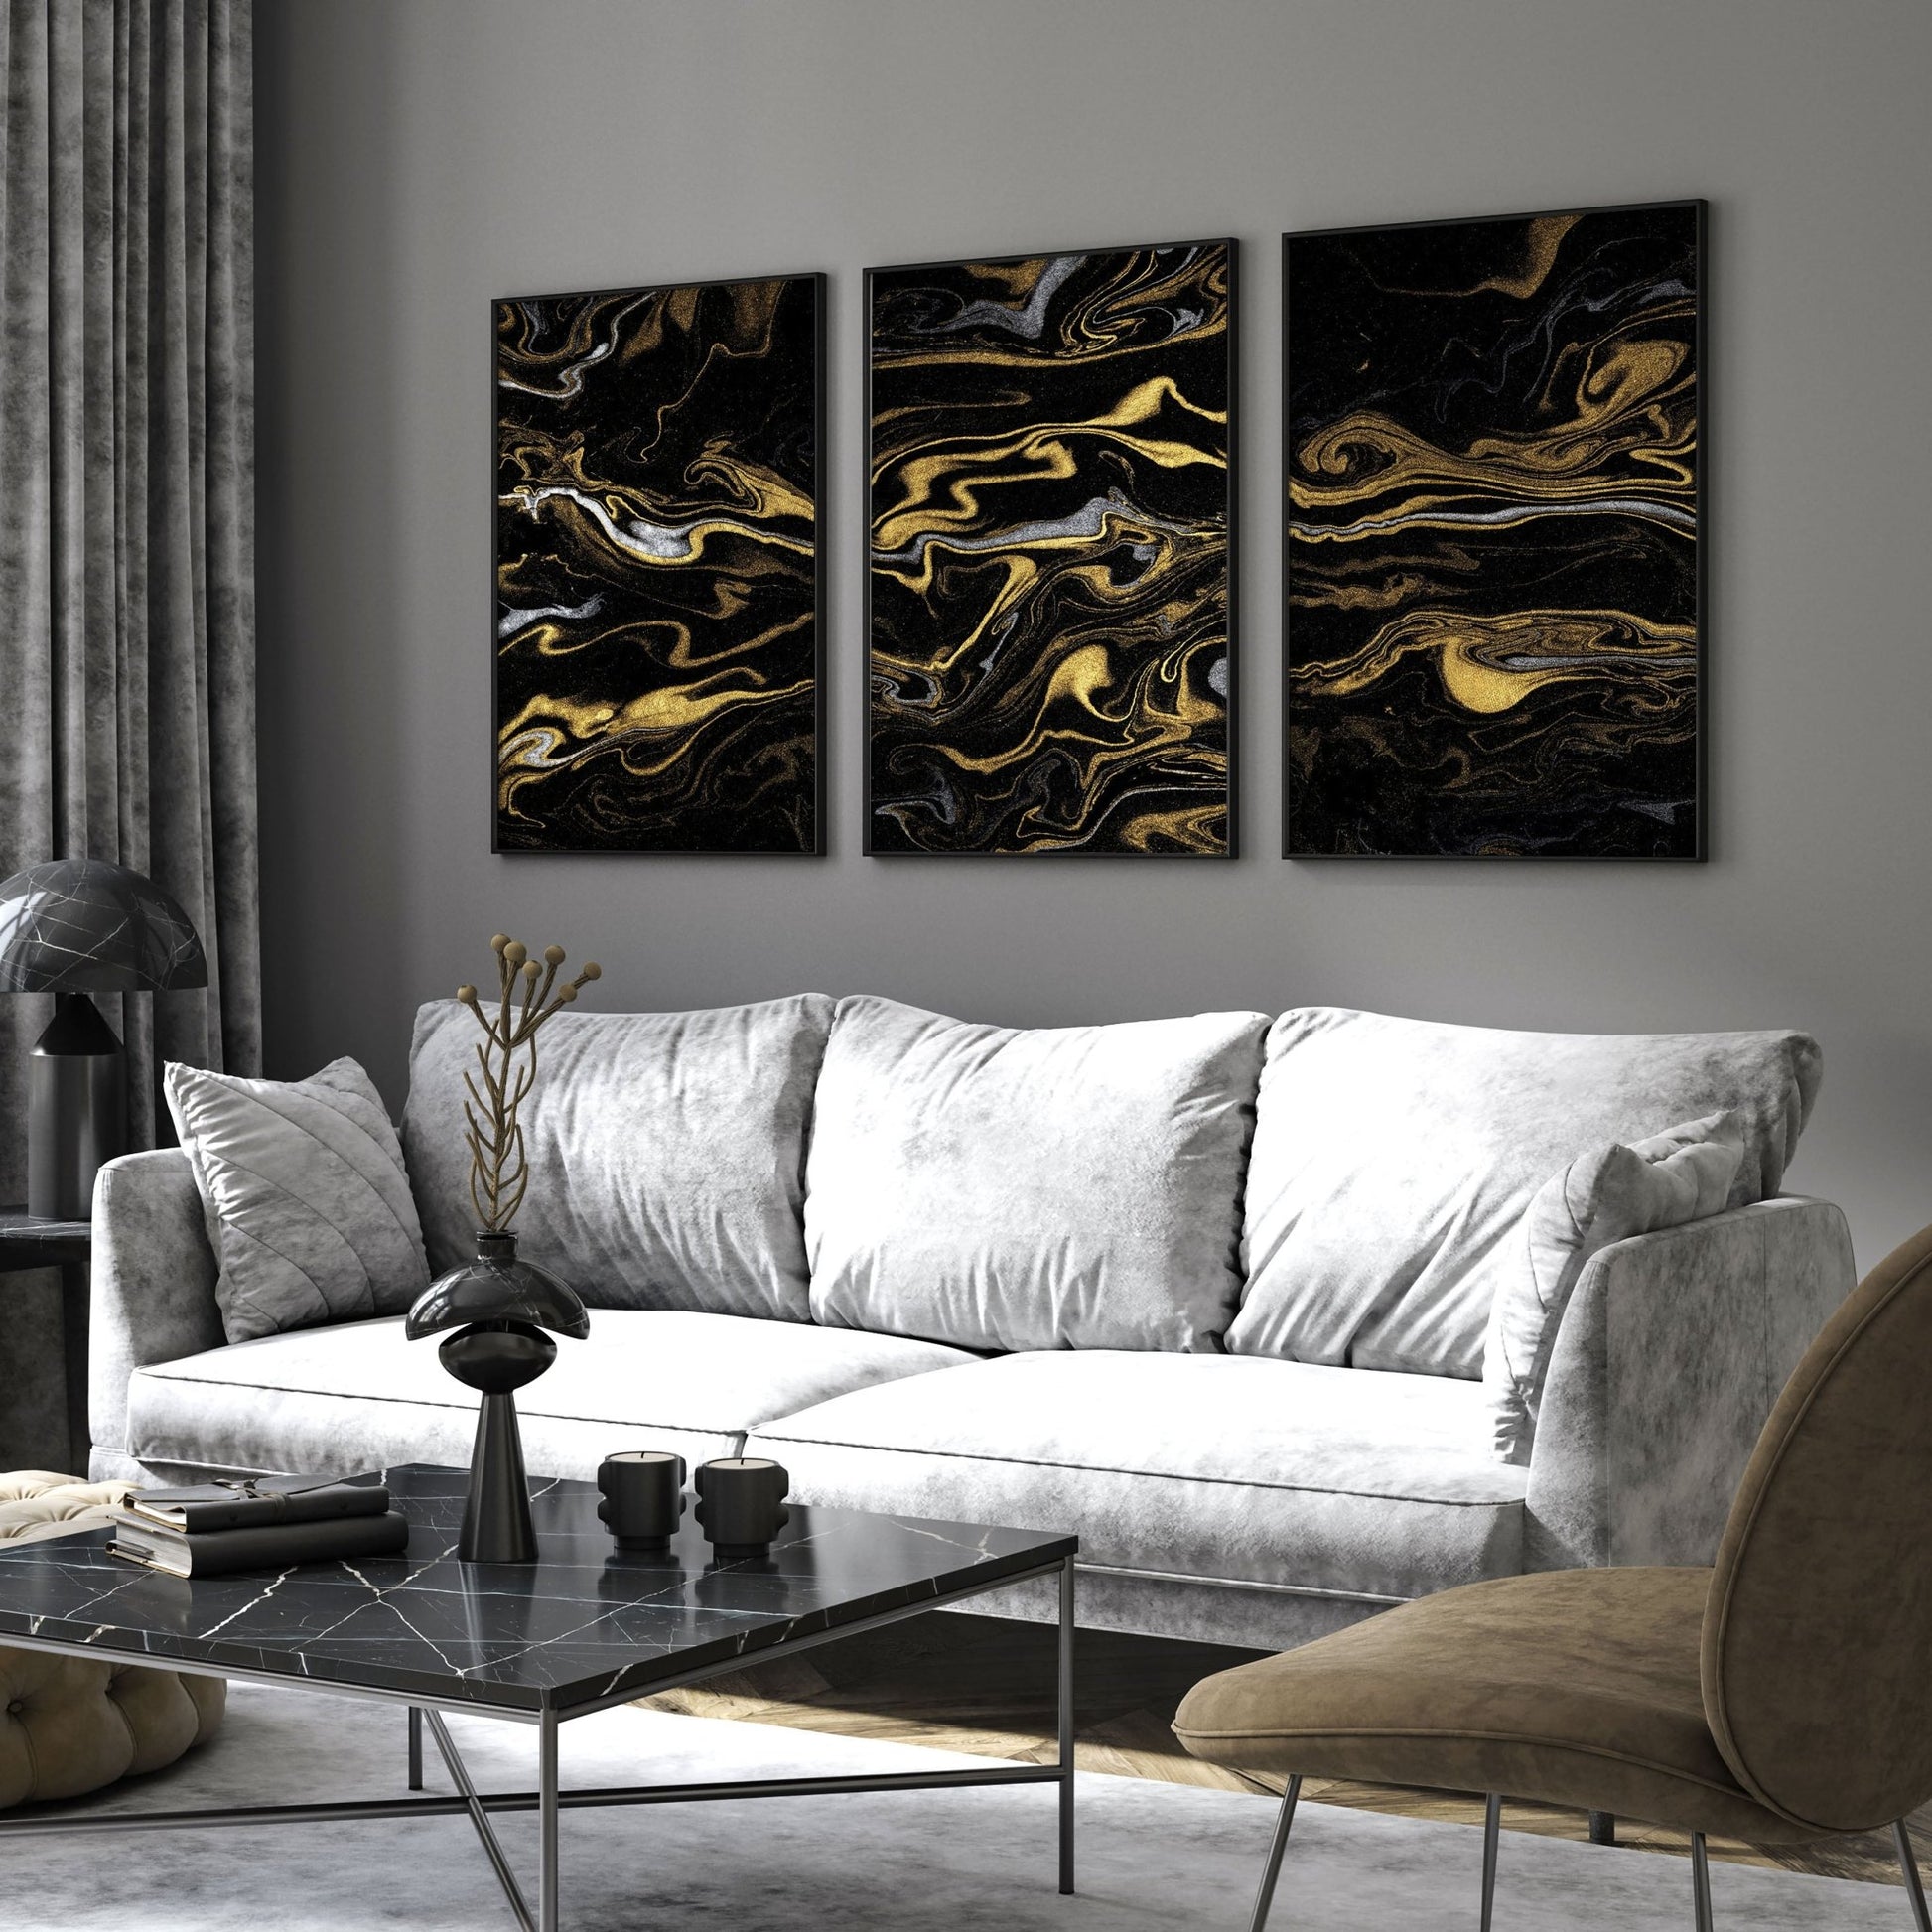 Contemporary artwork for living room | set of 3 wall art prints